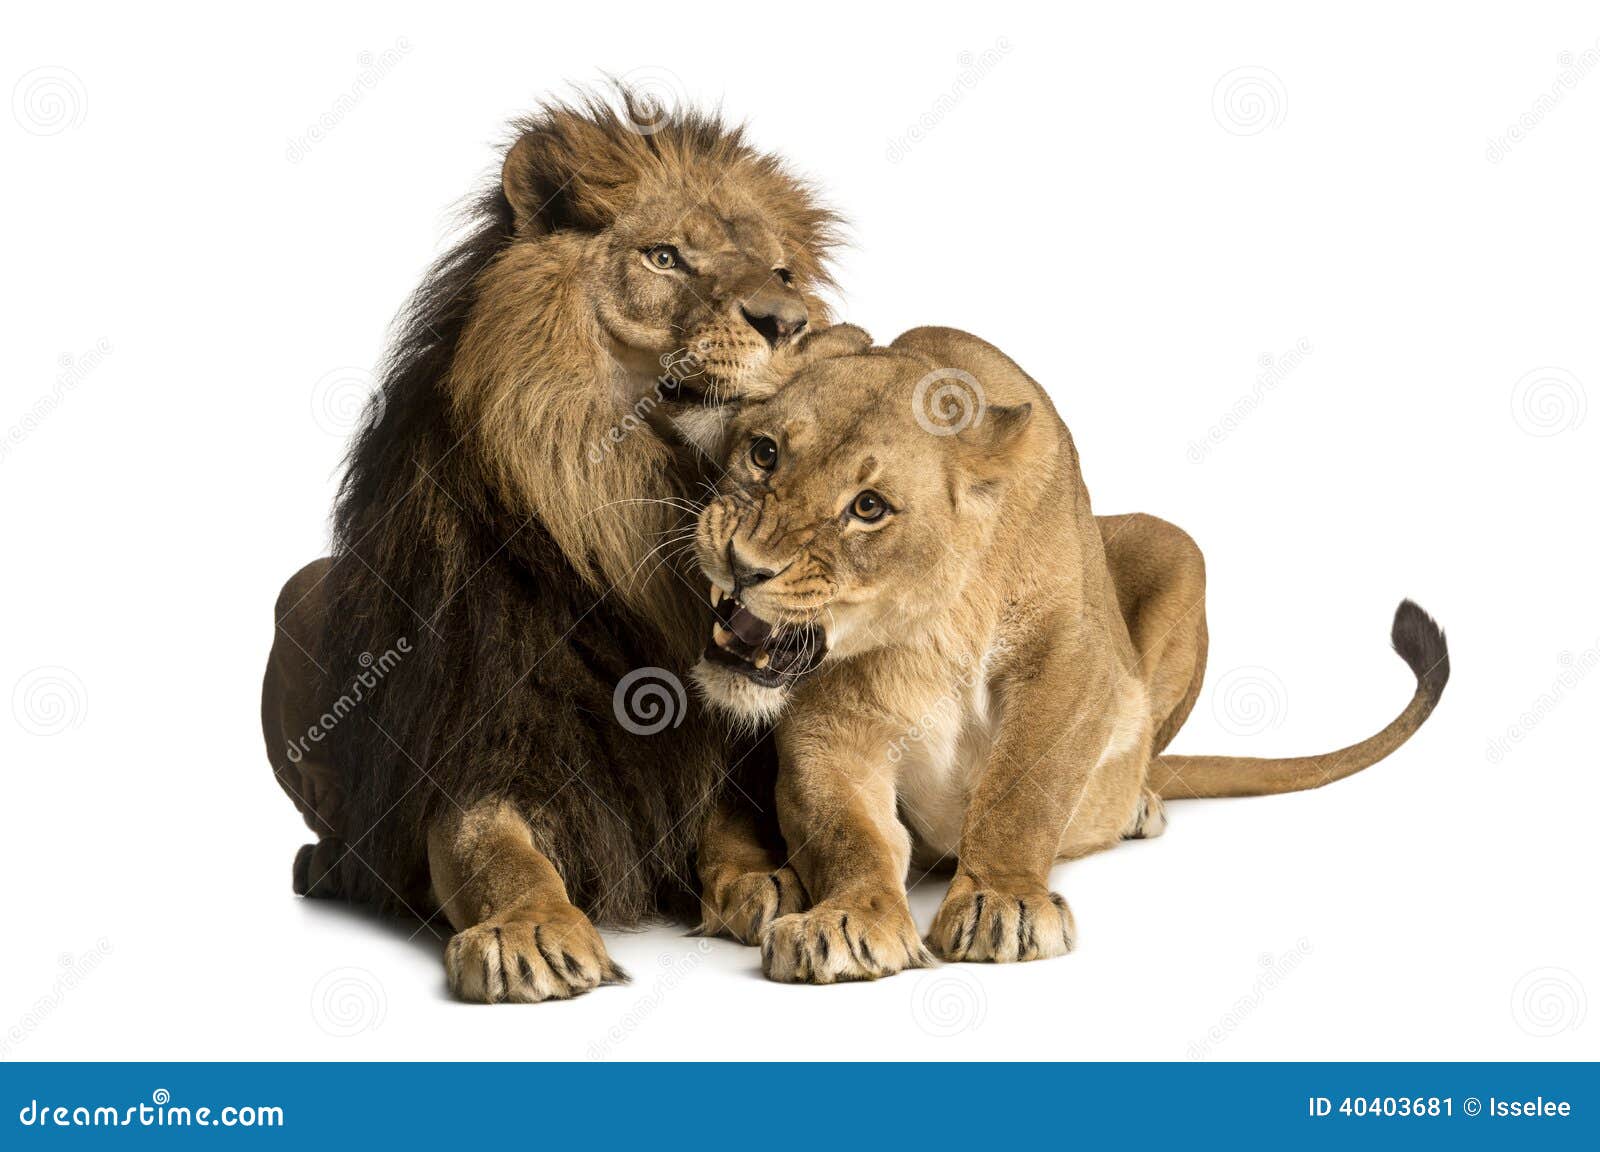 lion and lioness cuddling, lying, panthera leo